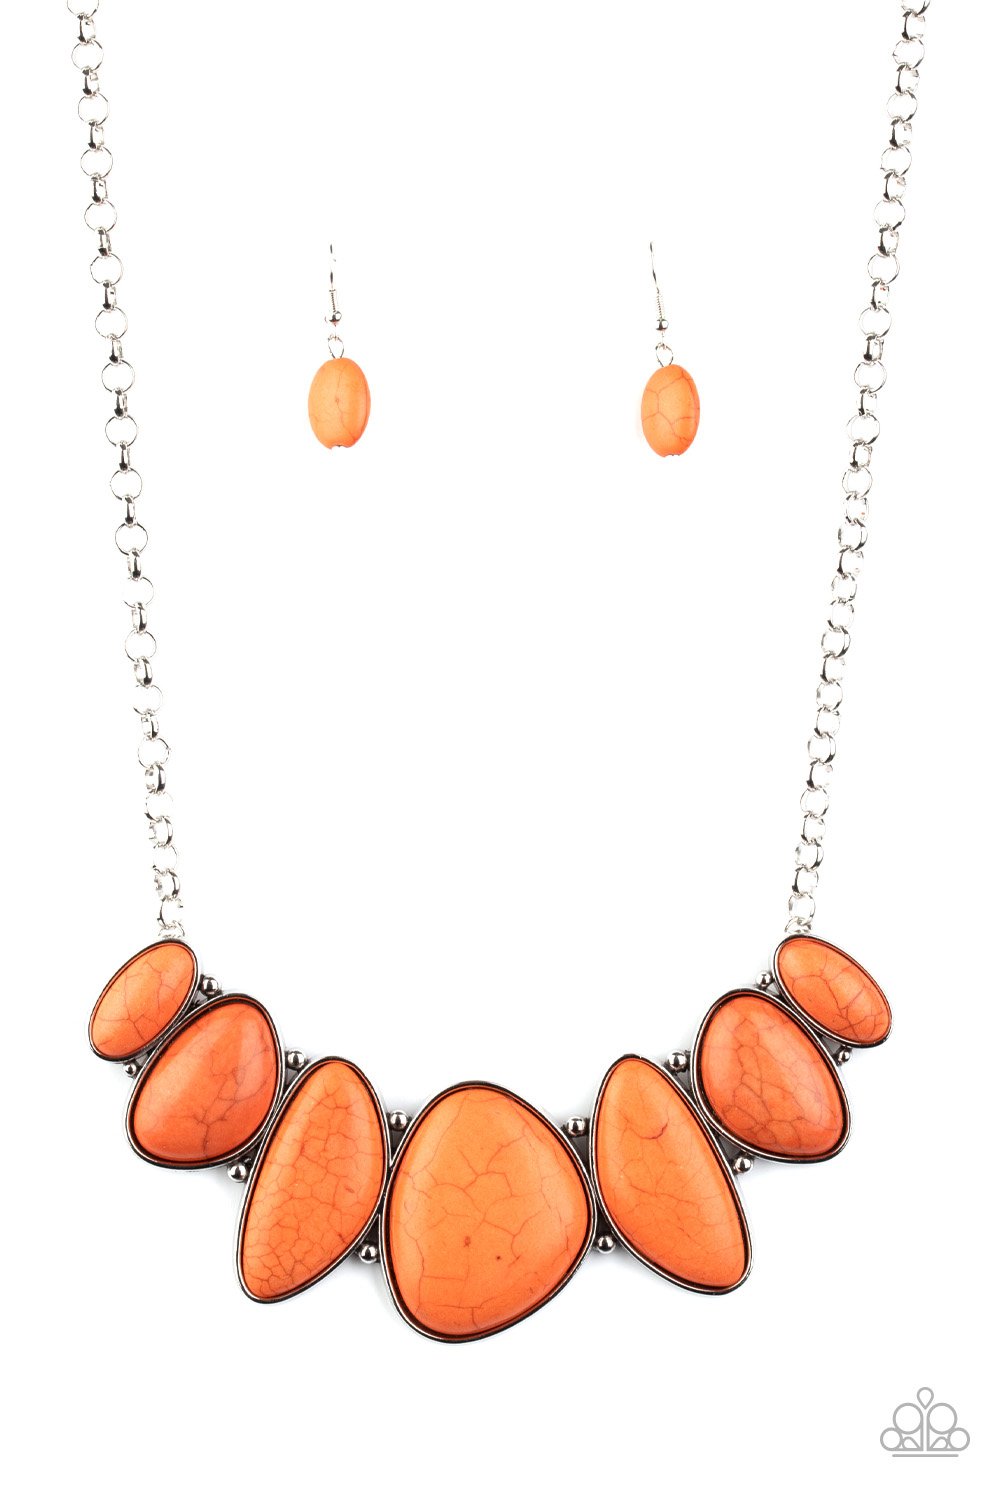 Primitive - Orange Necklace freeshipping - JewLz4u Gemstone Gallery